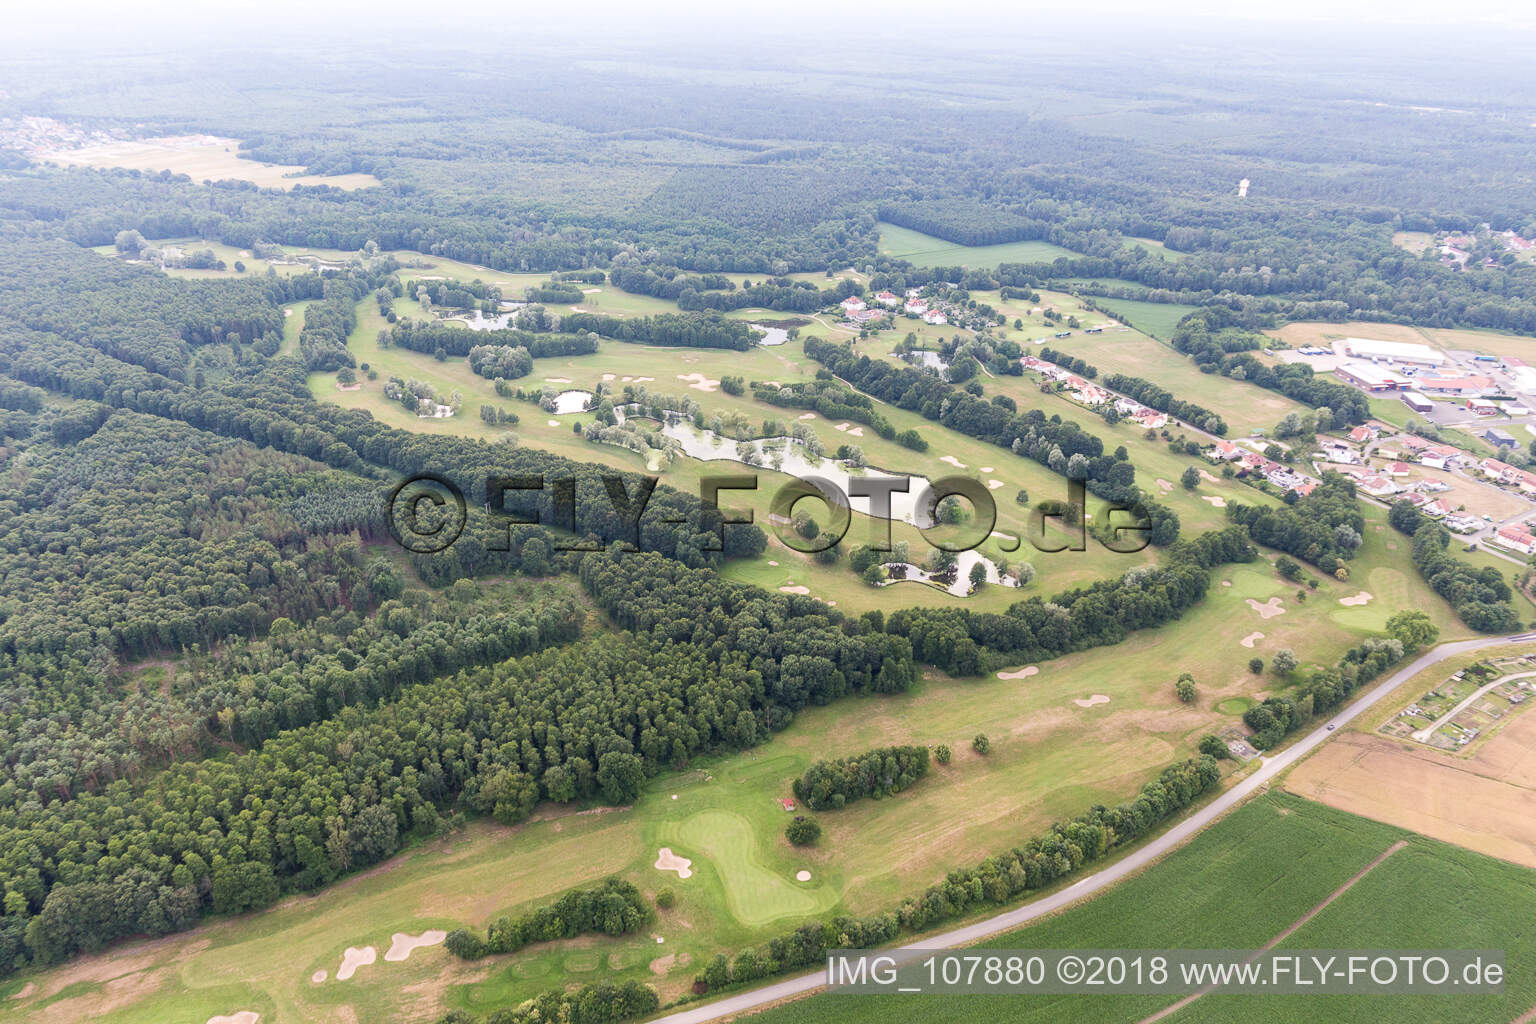 Aerial photograpy of Golf club in Soufflenheim in the state Bas-Rhin, France